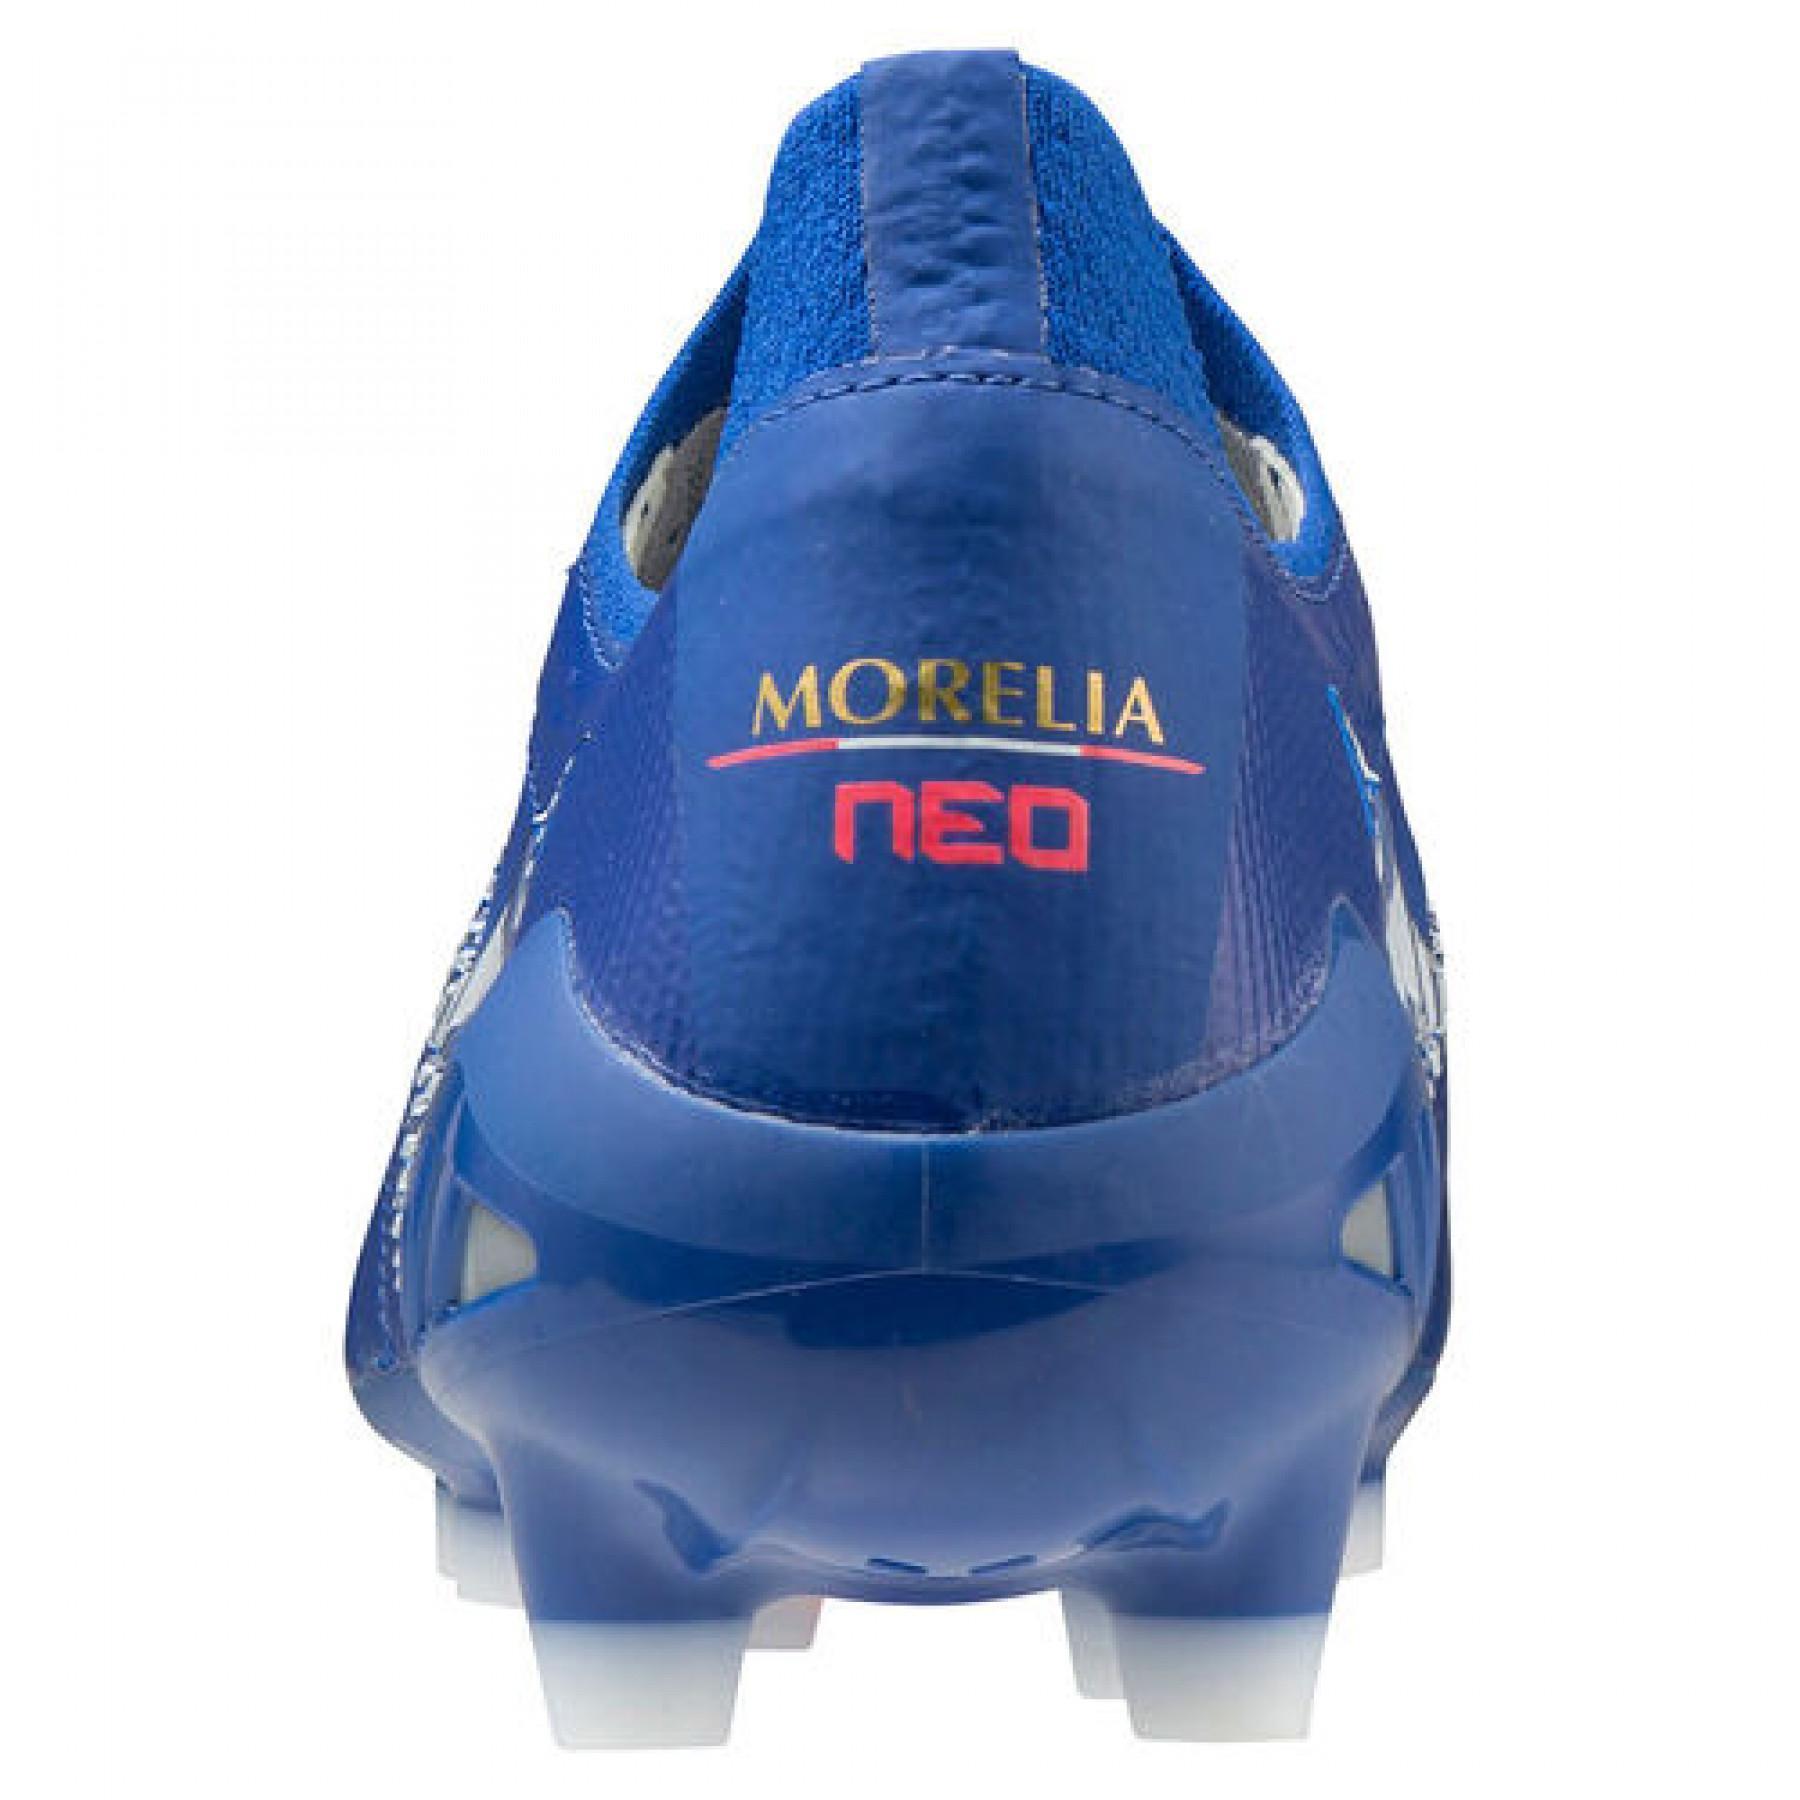 Sapatos Mizuno Morelia neo 3 beta japan